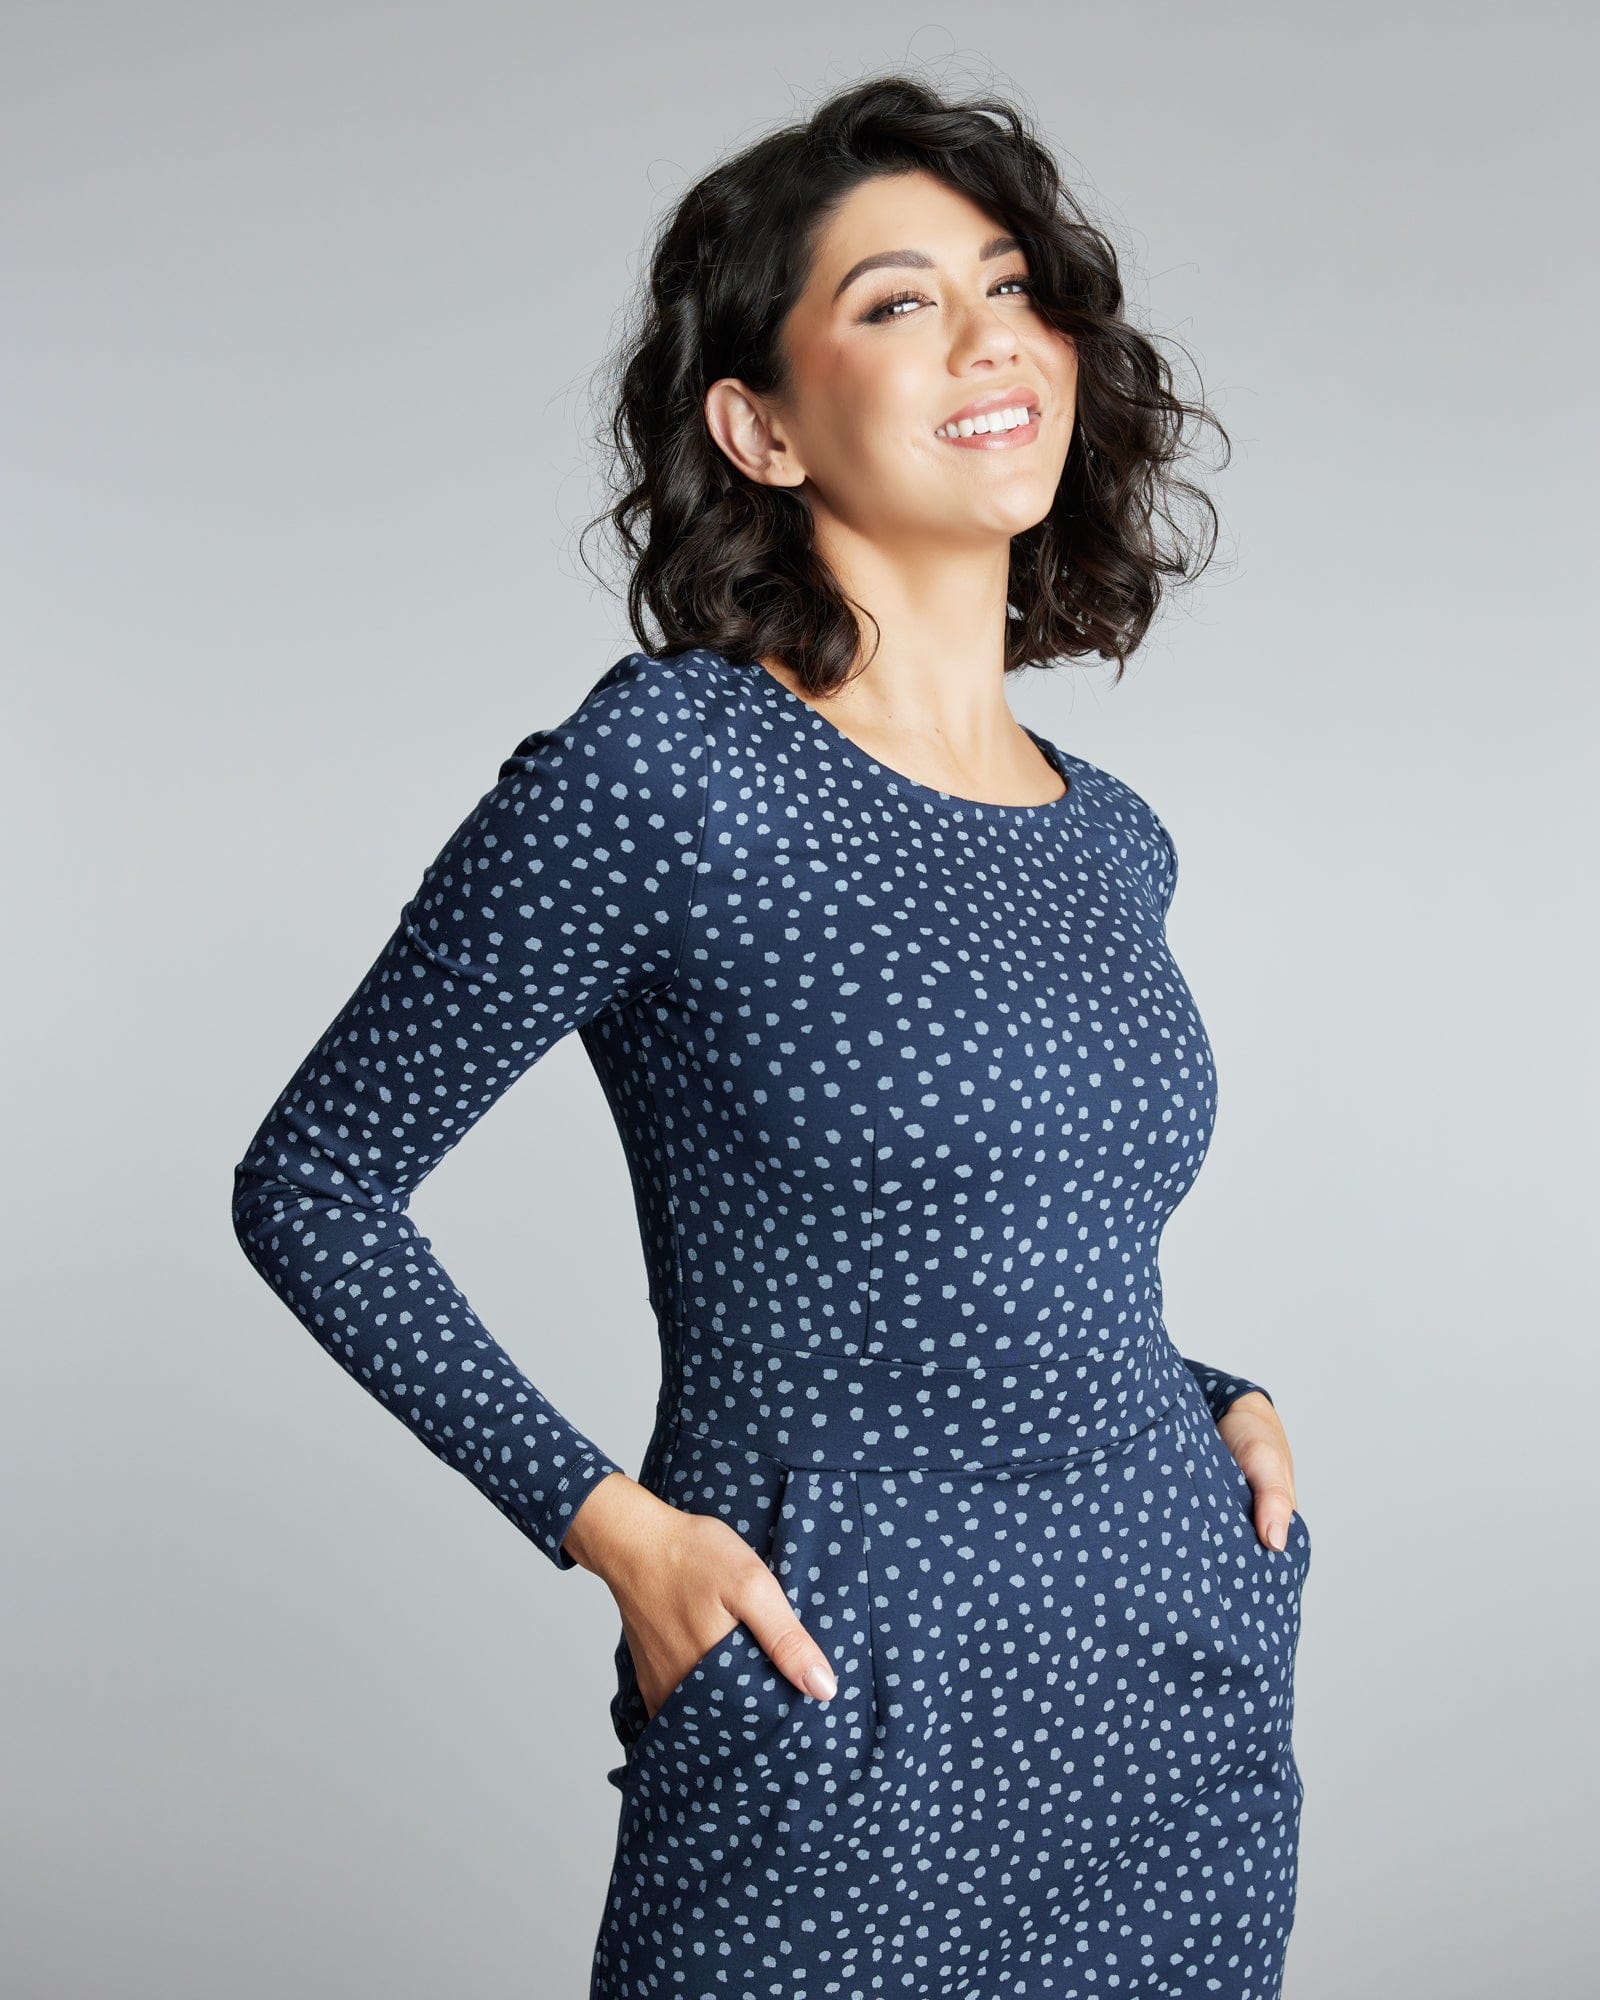 Woman in a long sleeve, knee-length polka dot dress